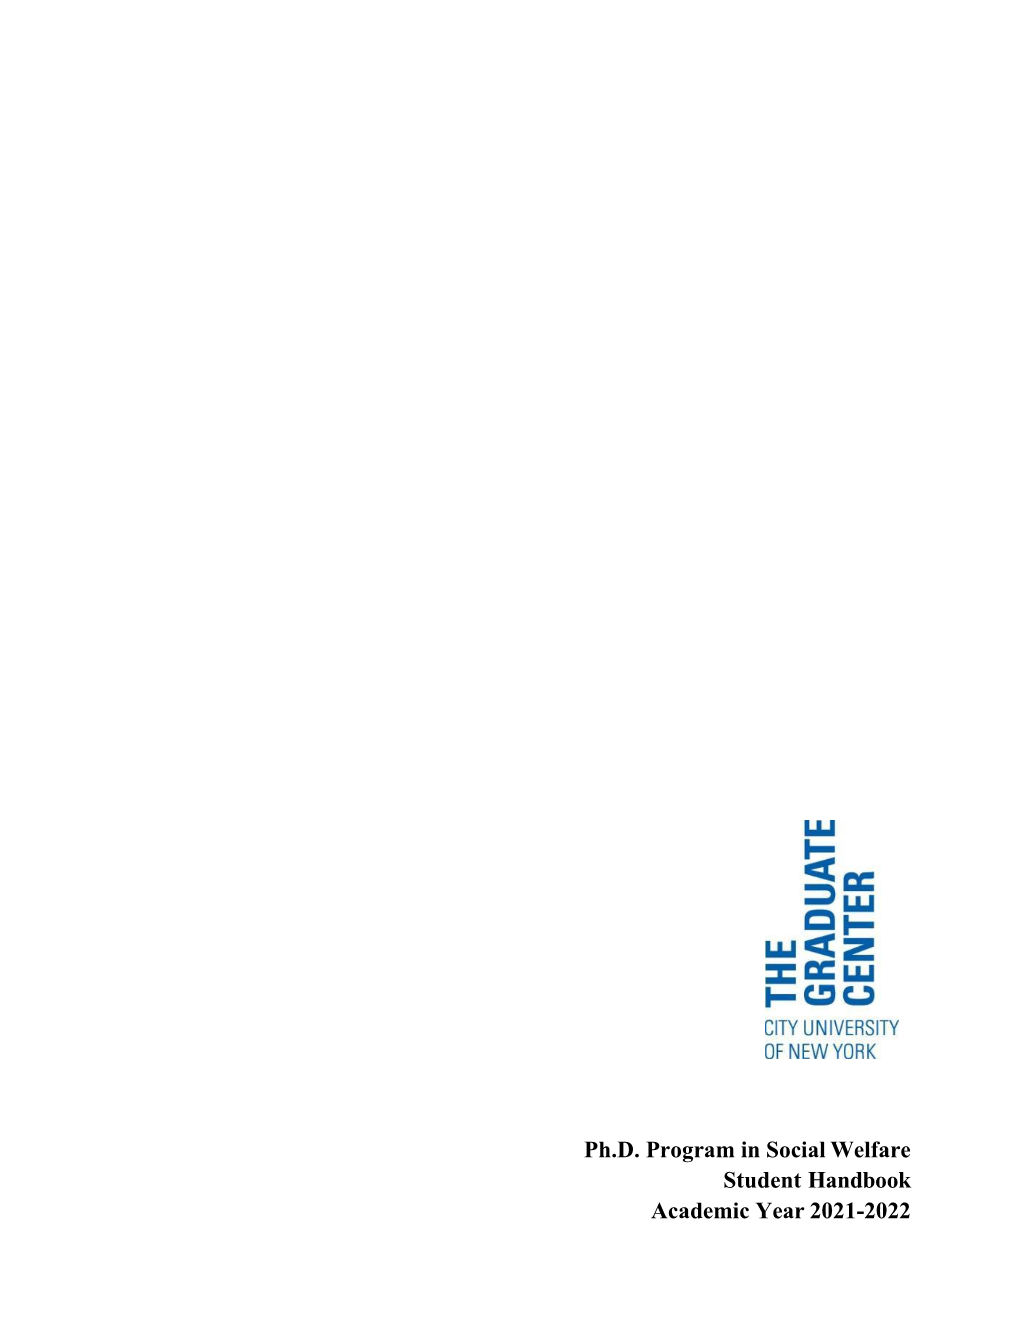 Ph.D. Program in Social Welfare Student Handbook Academic Year 2021-2022